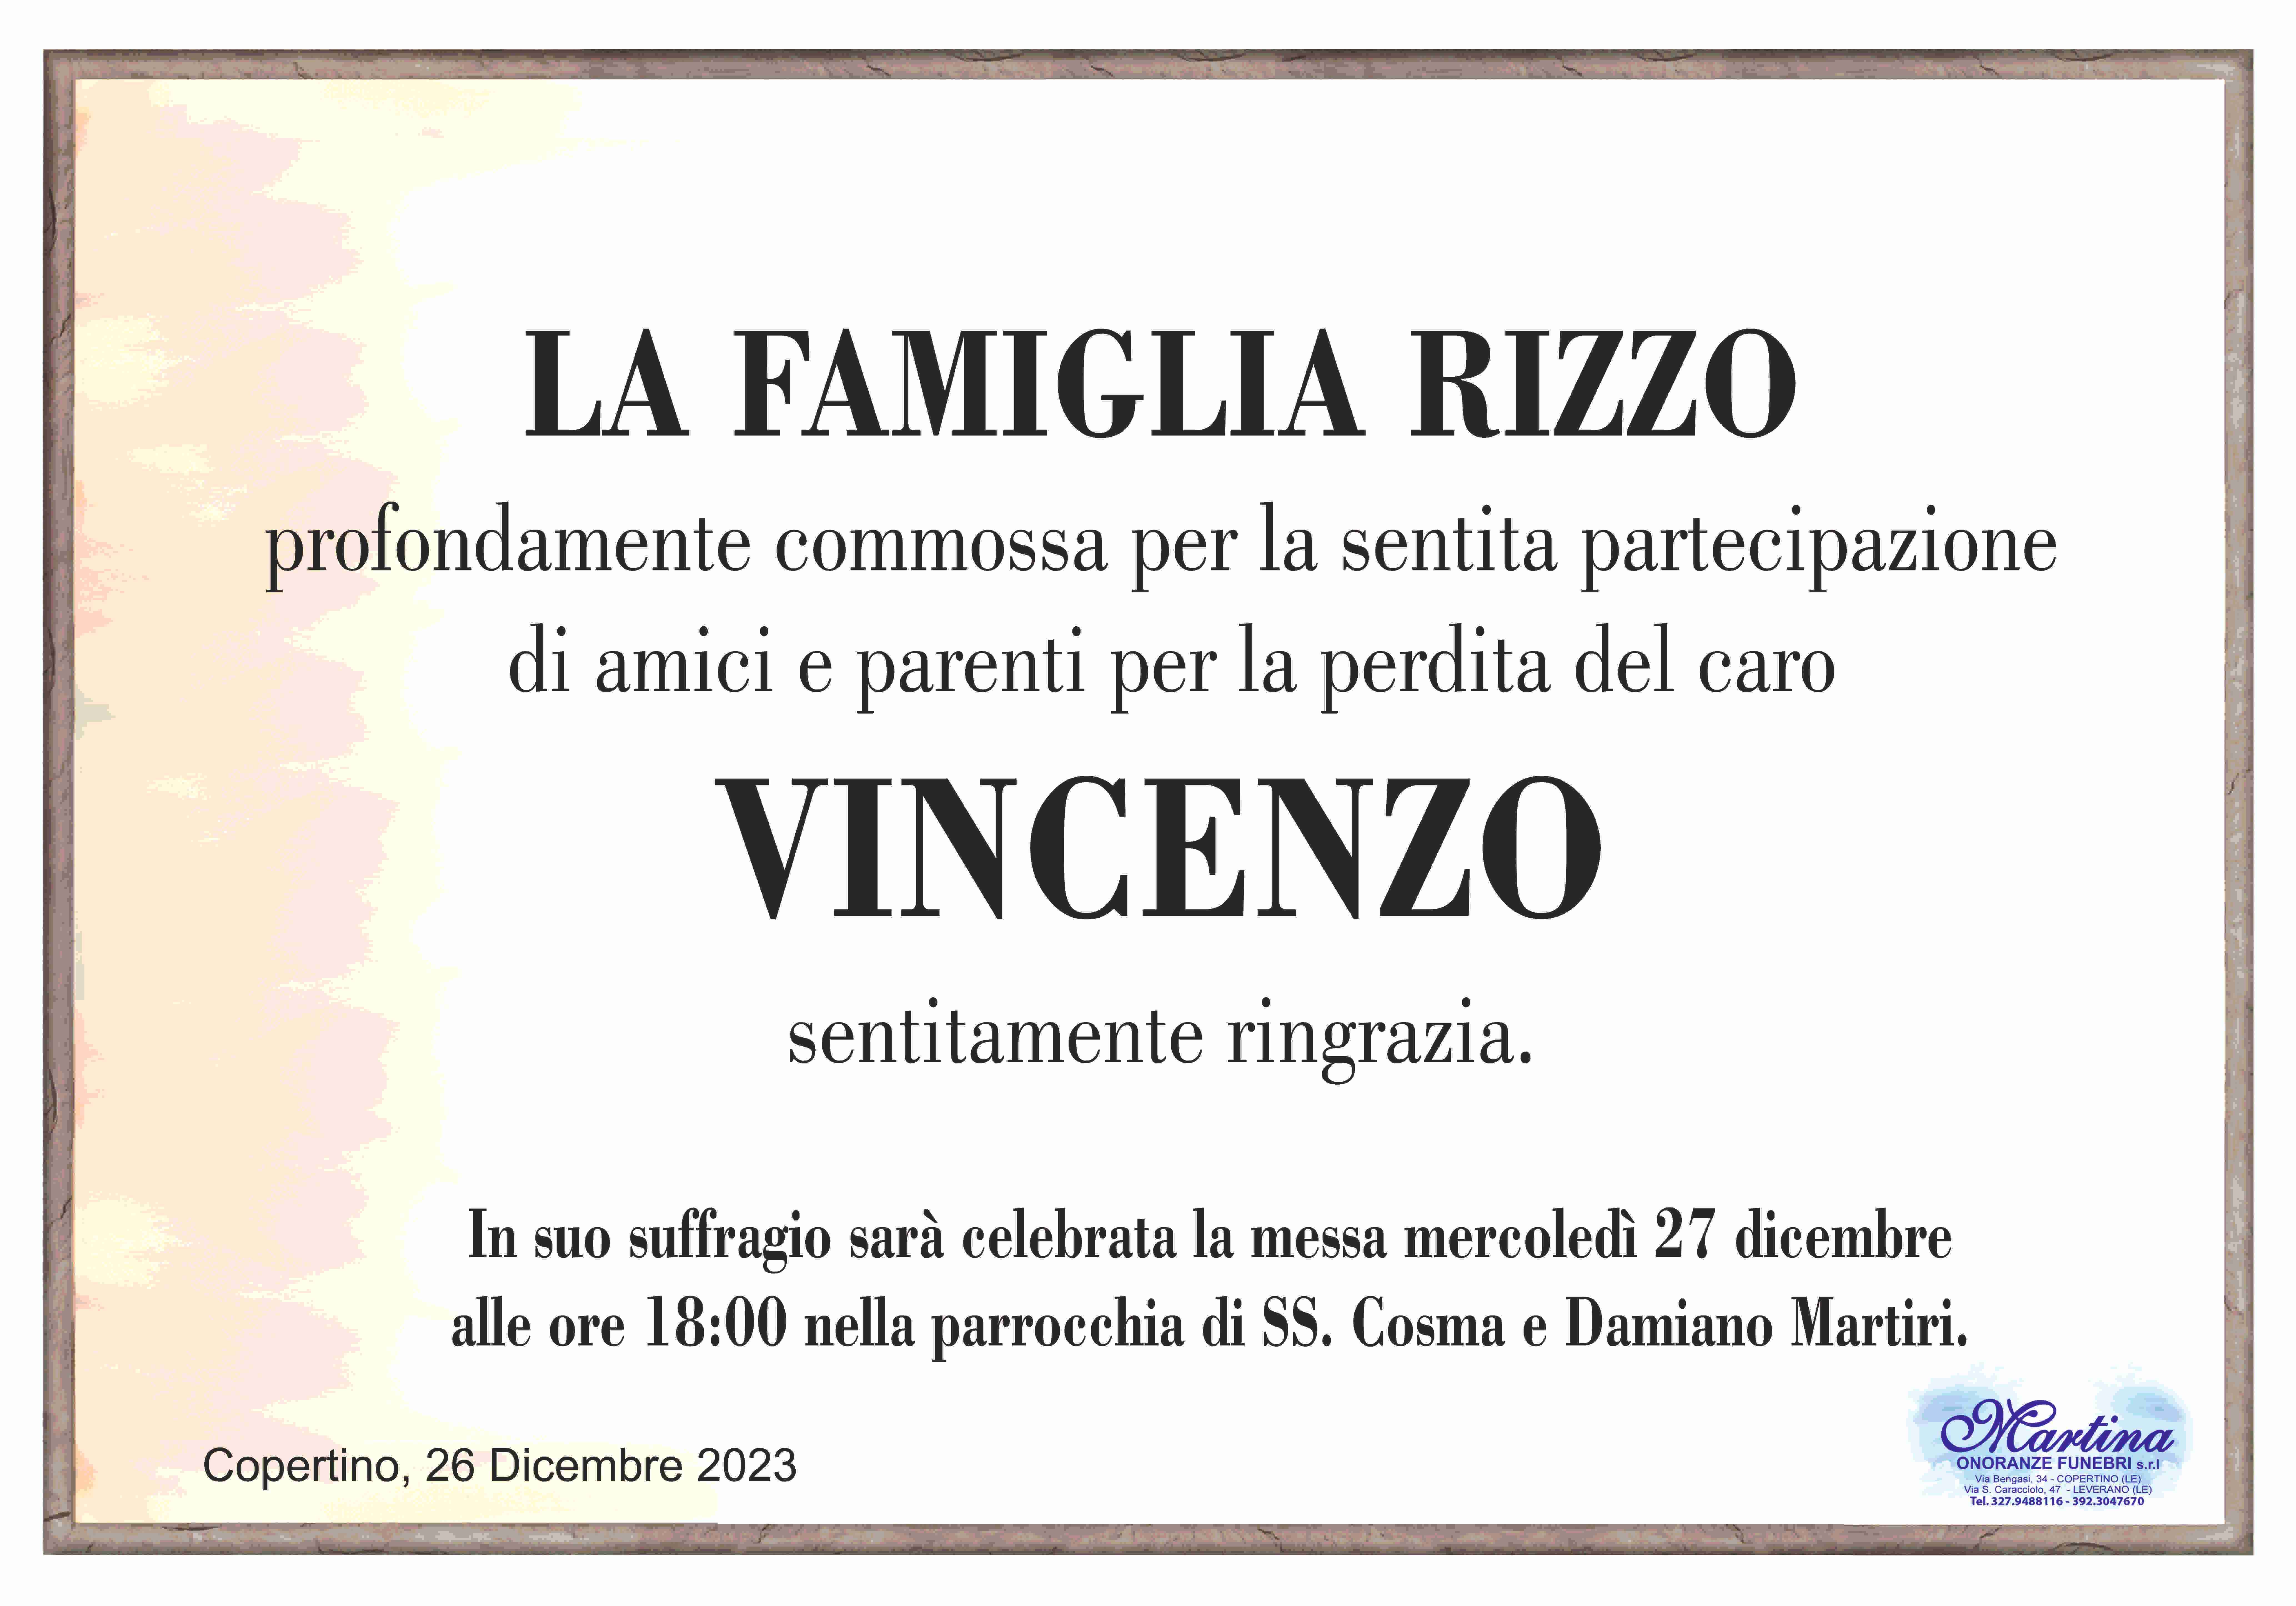 Vincenzo Rizzo